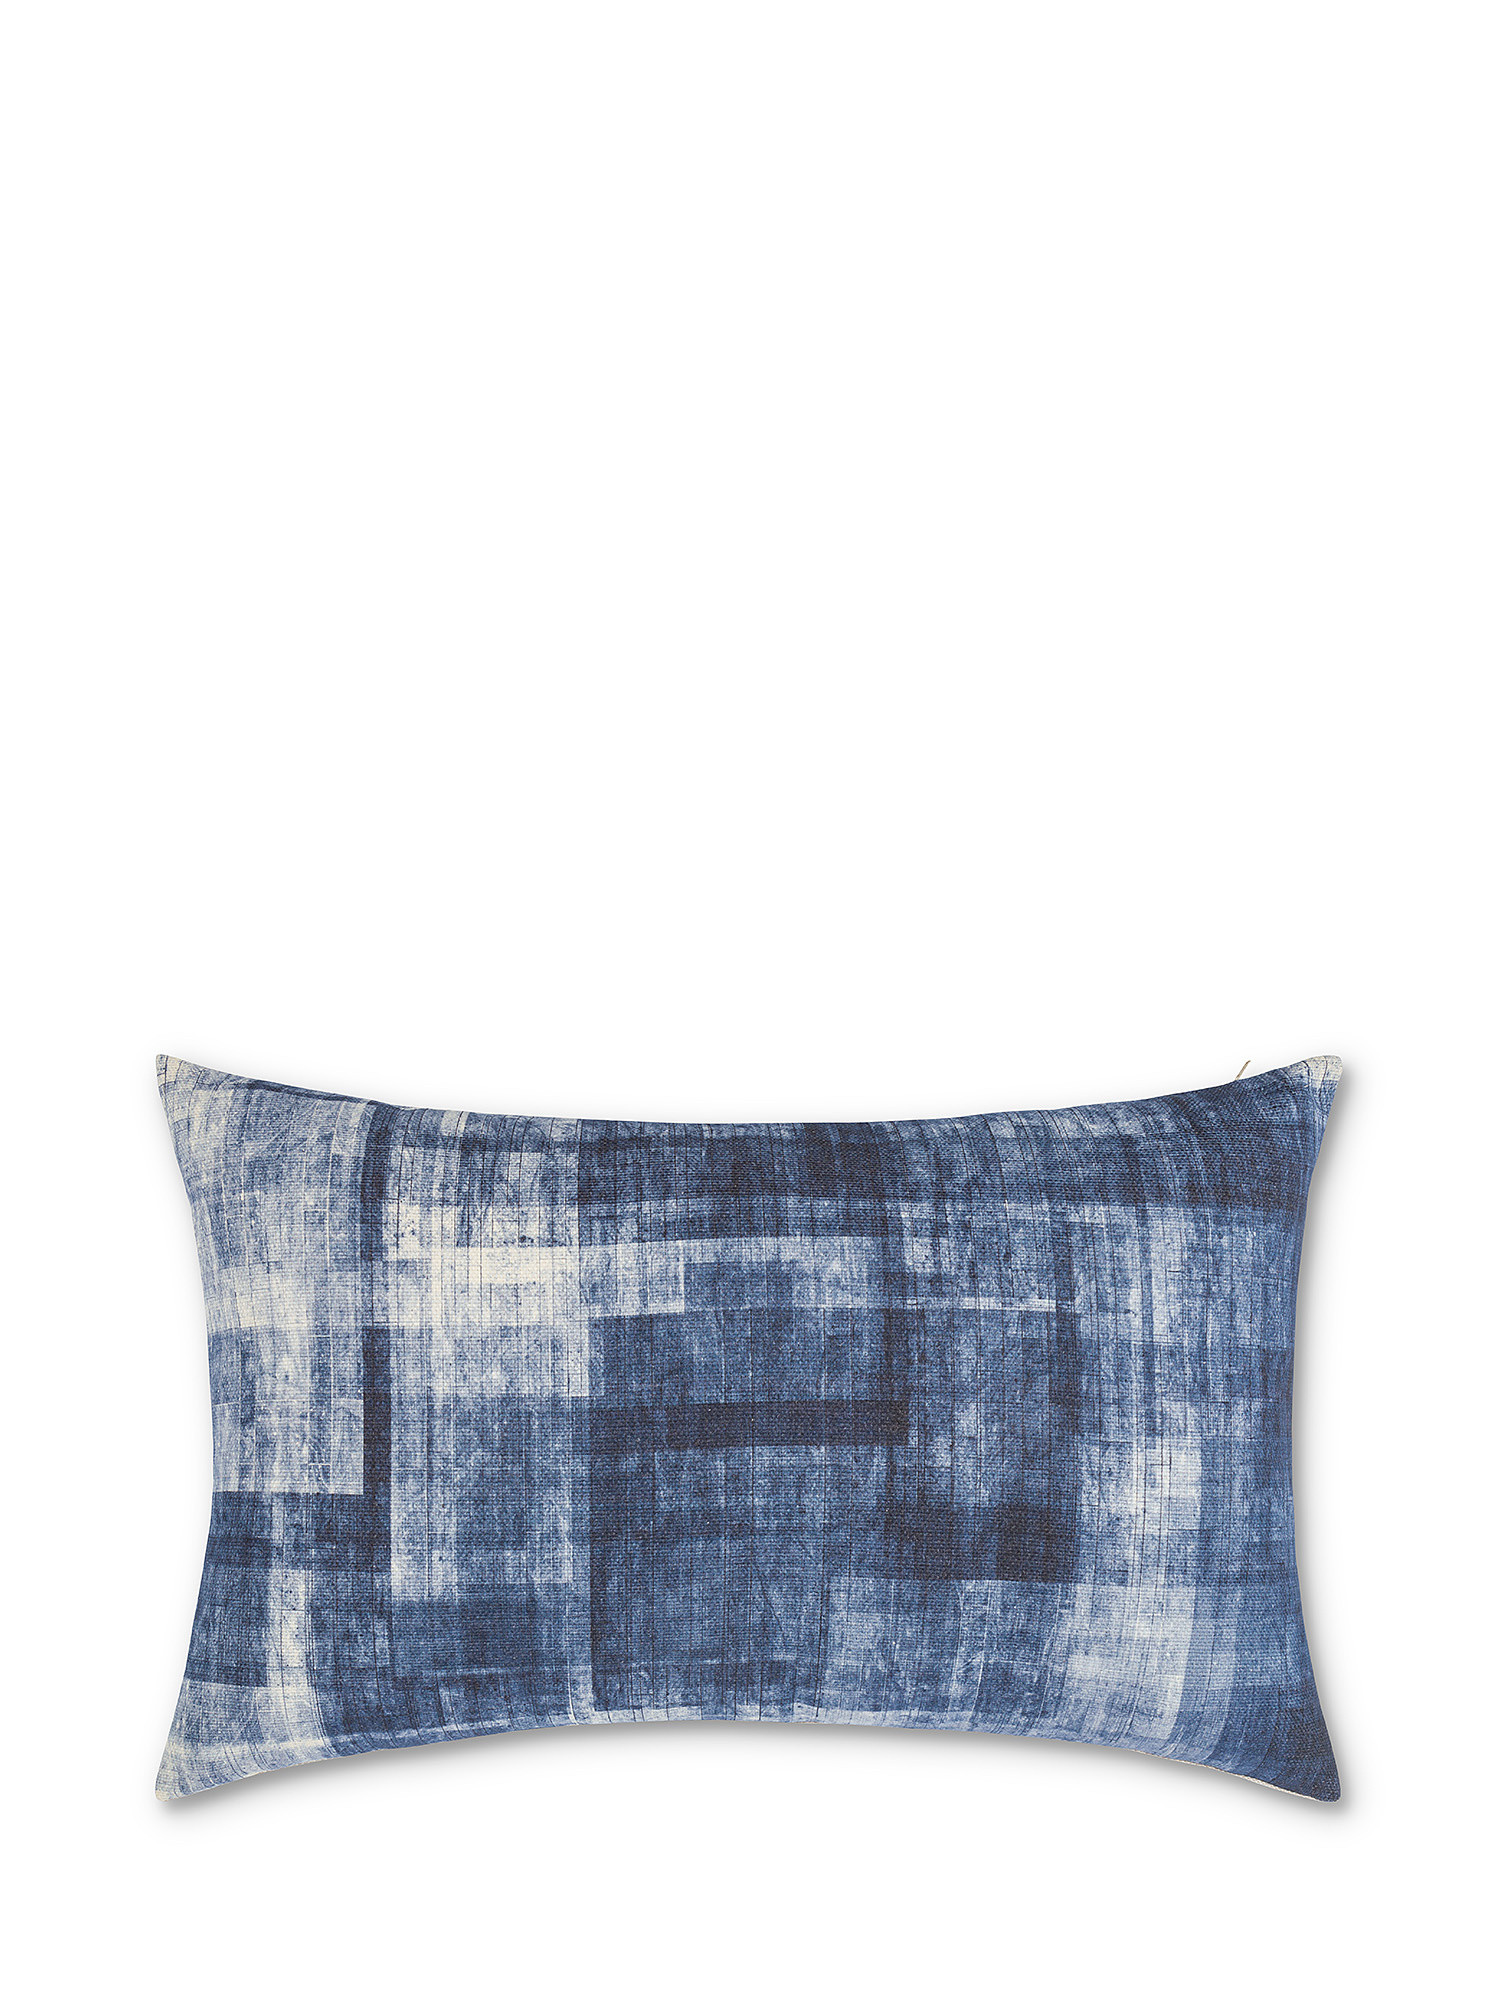 Cuscino tessuto stampato 35x55cm, Azzurro, large image number 0